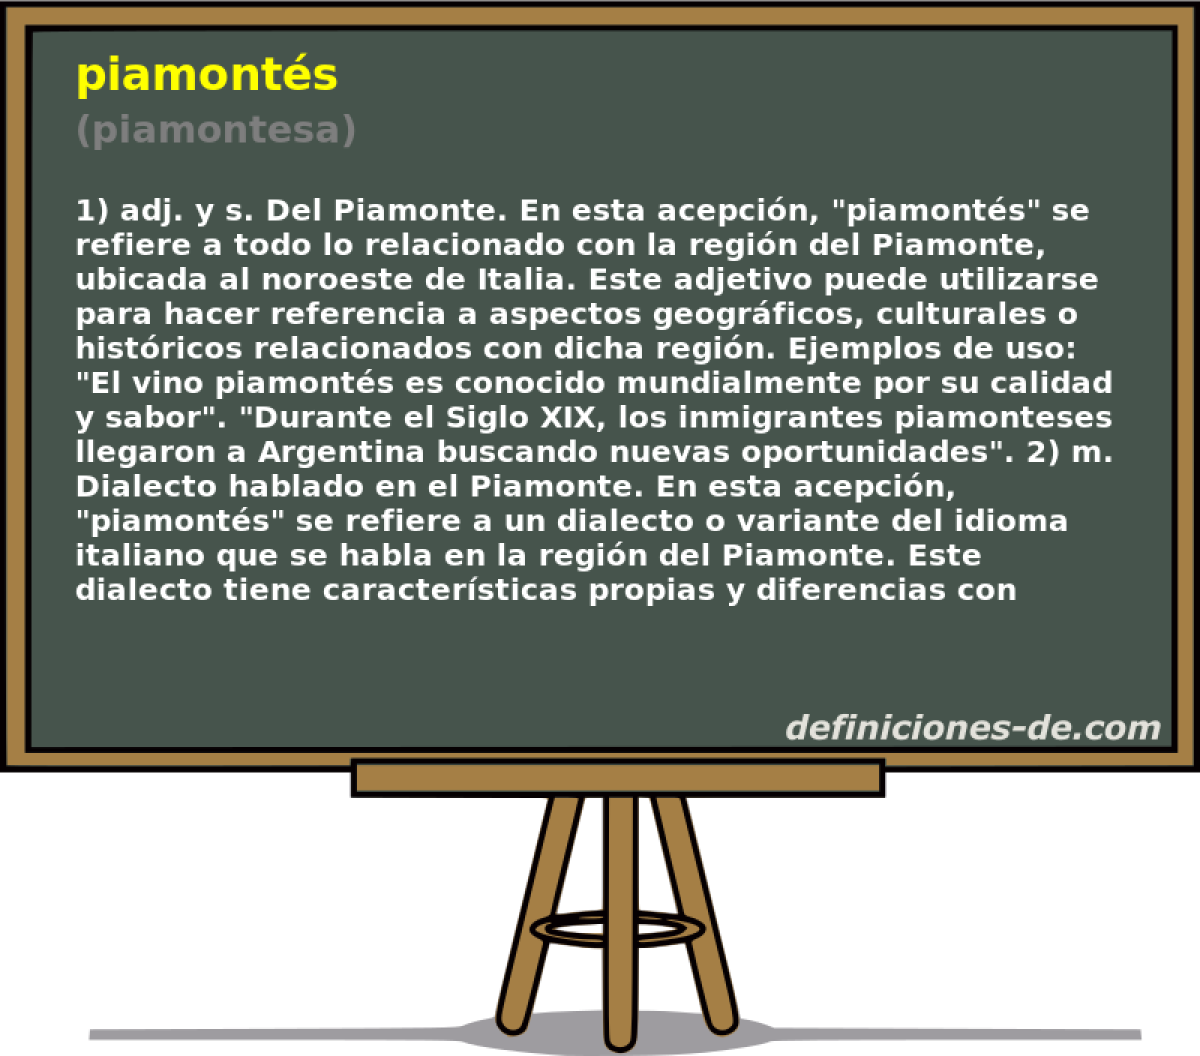 piamonts (piamontesa)